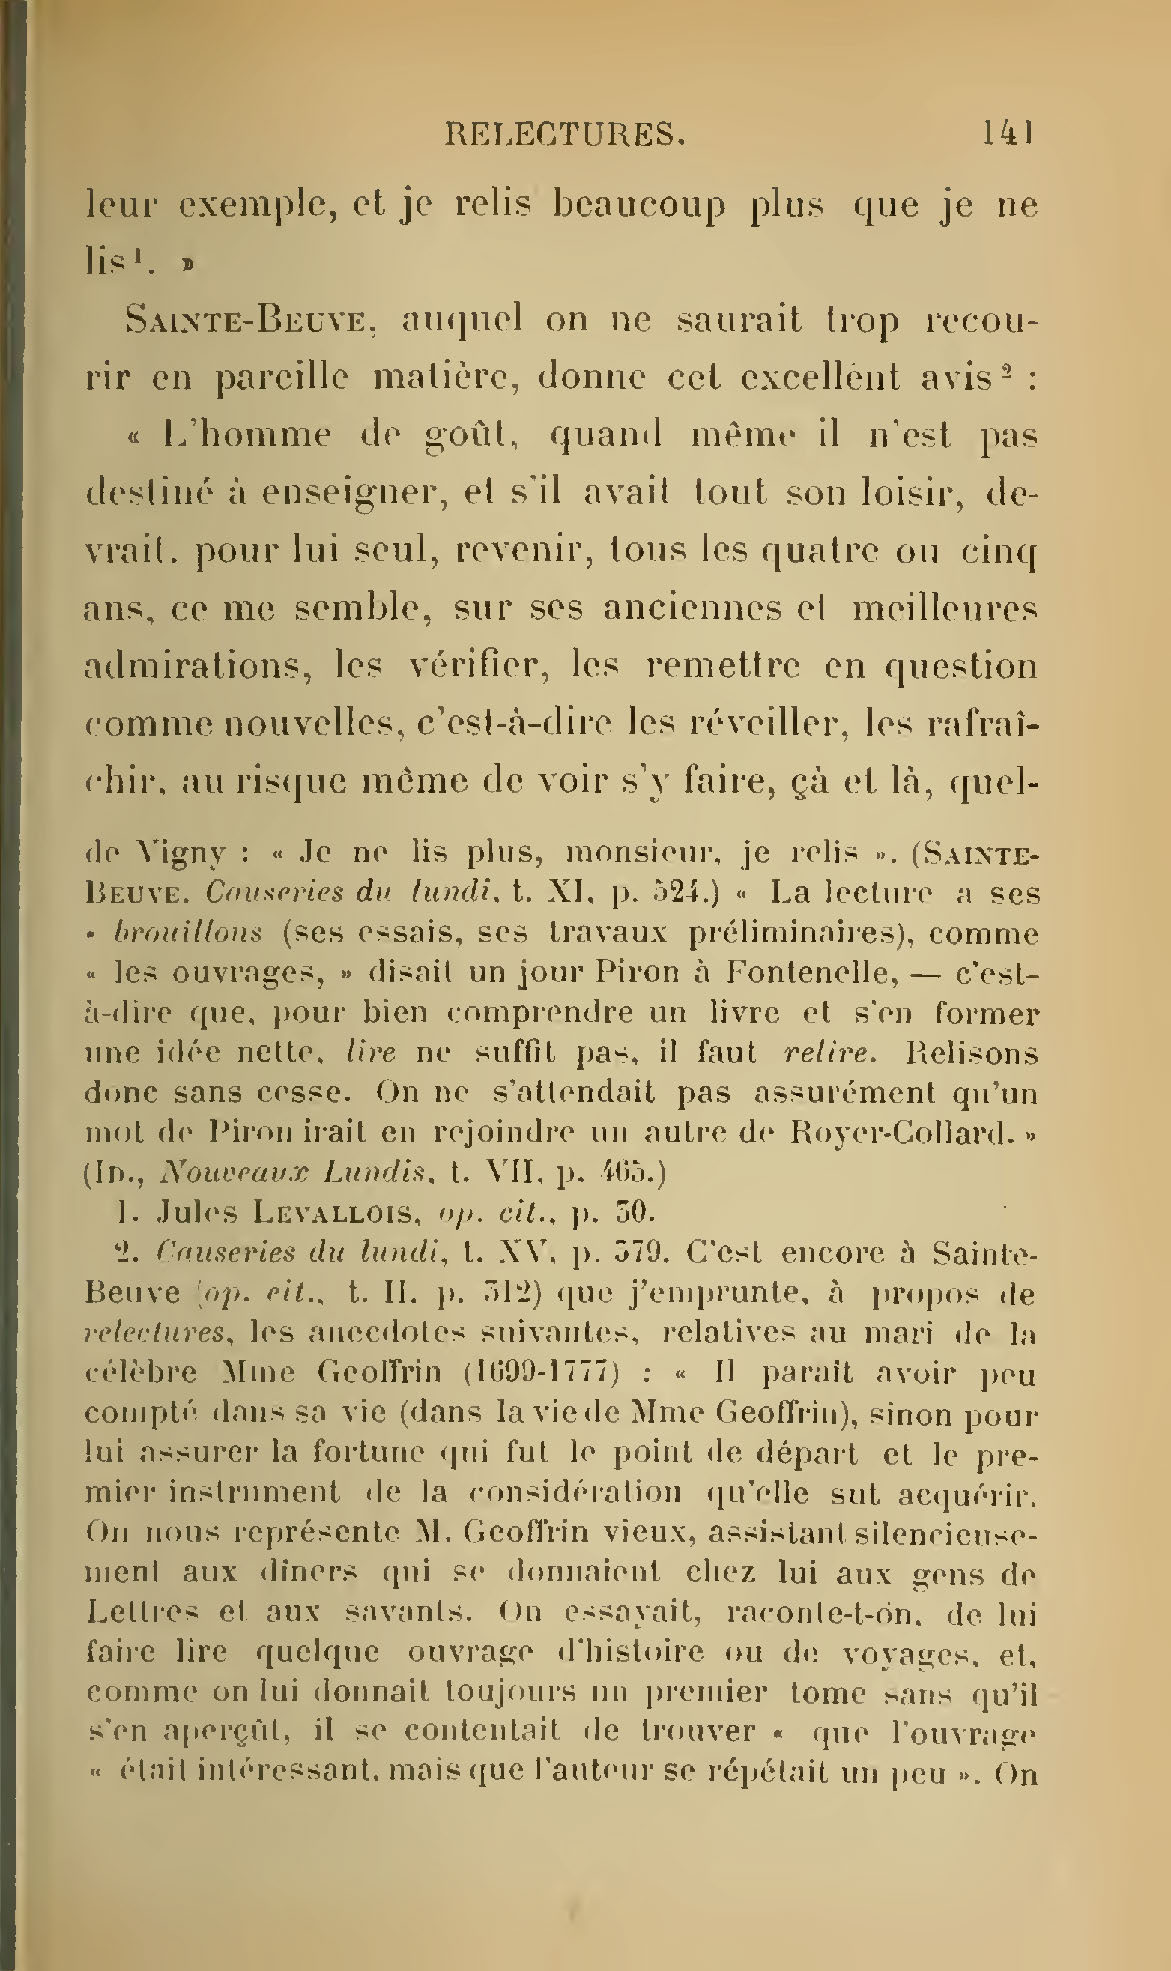 Albert Cim, Le Livre, t. II, p. 141.